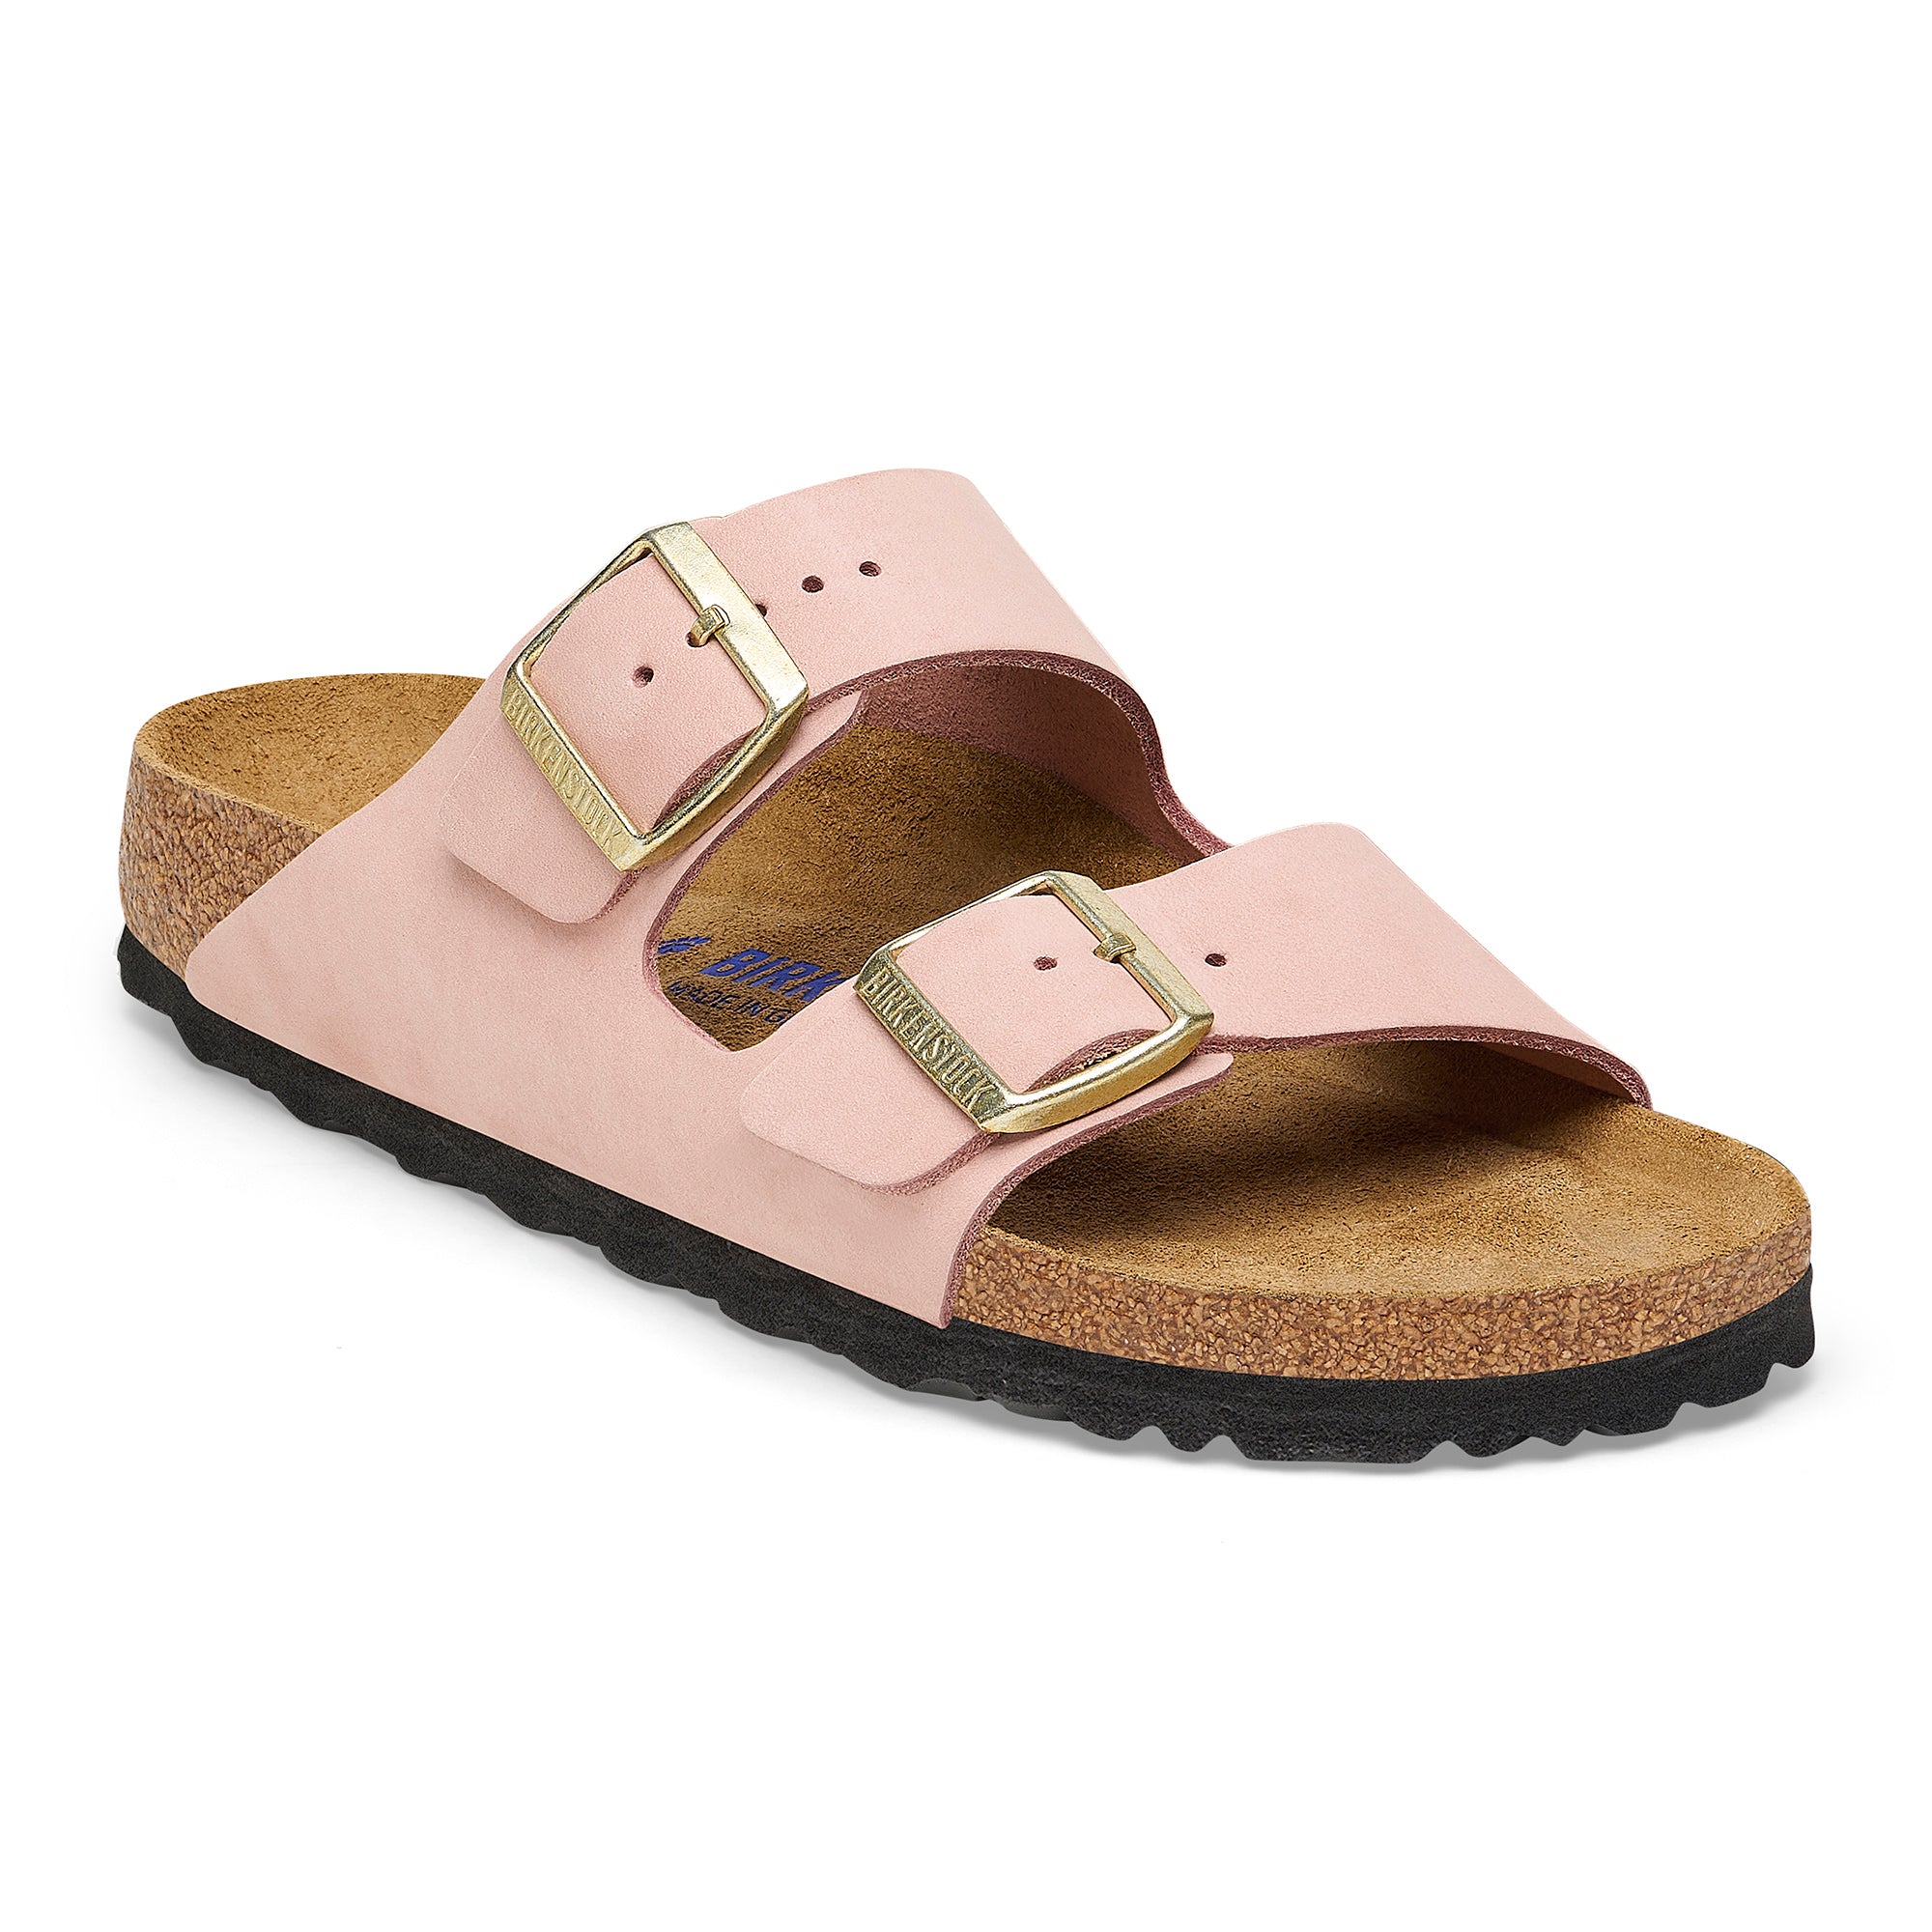 Birkenstock Limited Edition Arizona Soft Footbed soft pink nubuck